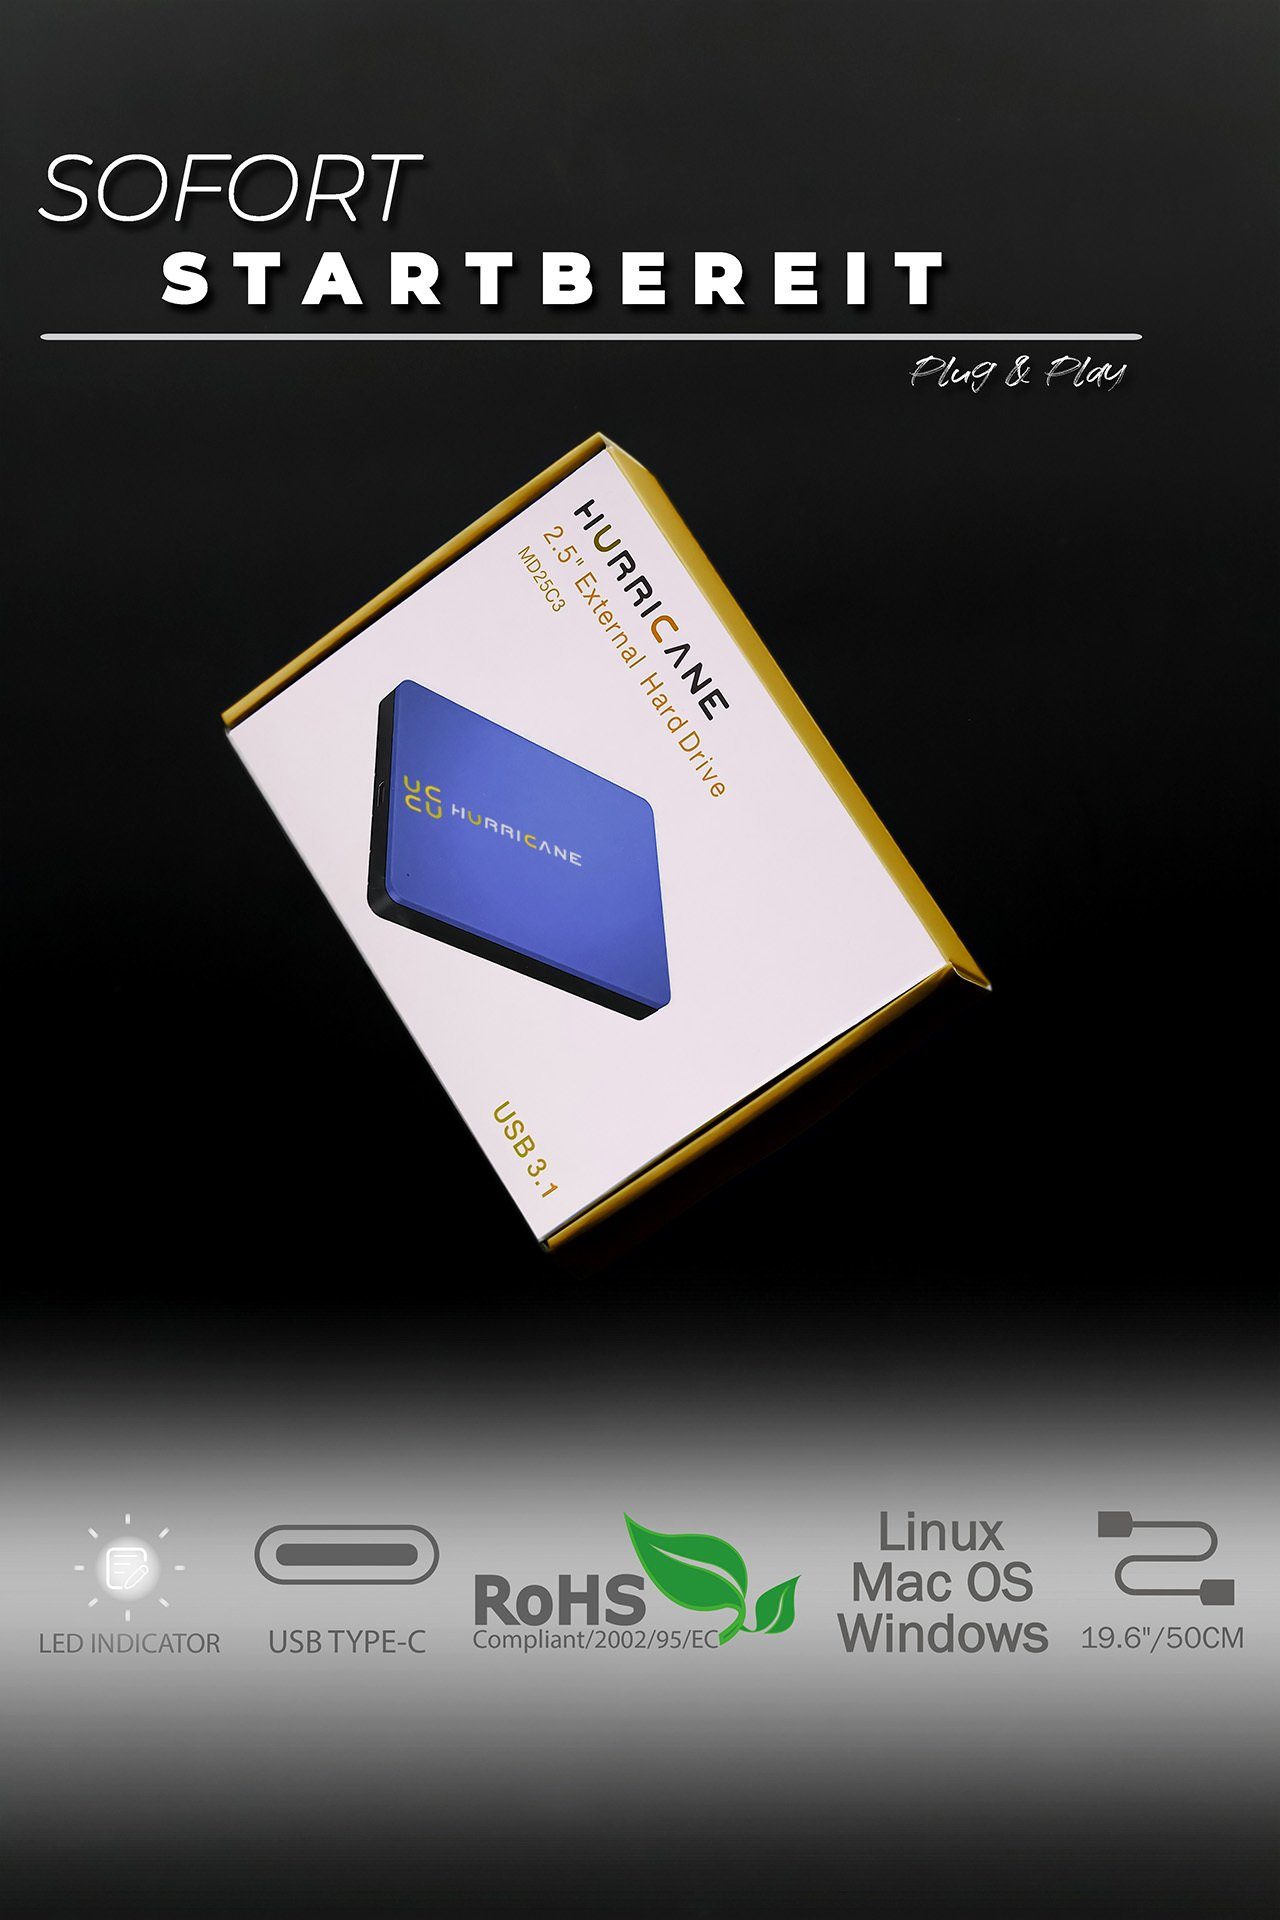 HURRICANE MD25C3 Tragbare smart USB Linux 500GB für Laptop Xbox, 2,5" PS4 HDD-Festplatte Festplatte Windows Mac TV kompatibel PS5 (500GB) externe 2,5", und C mit Externe